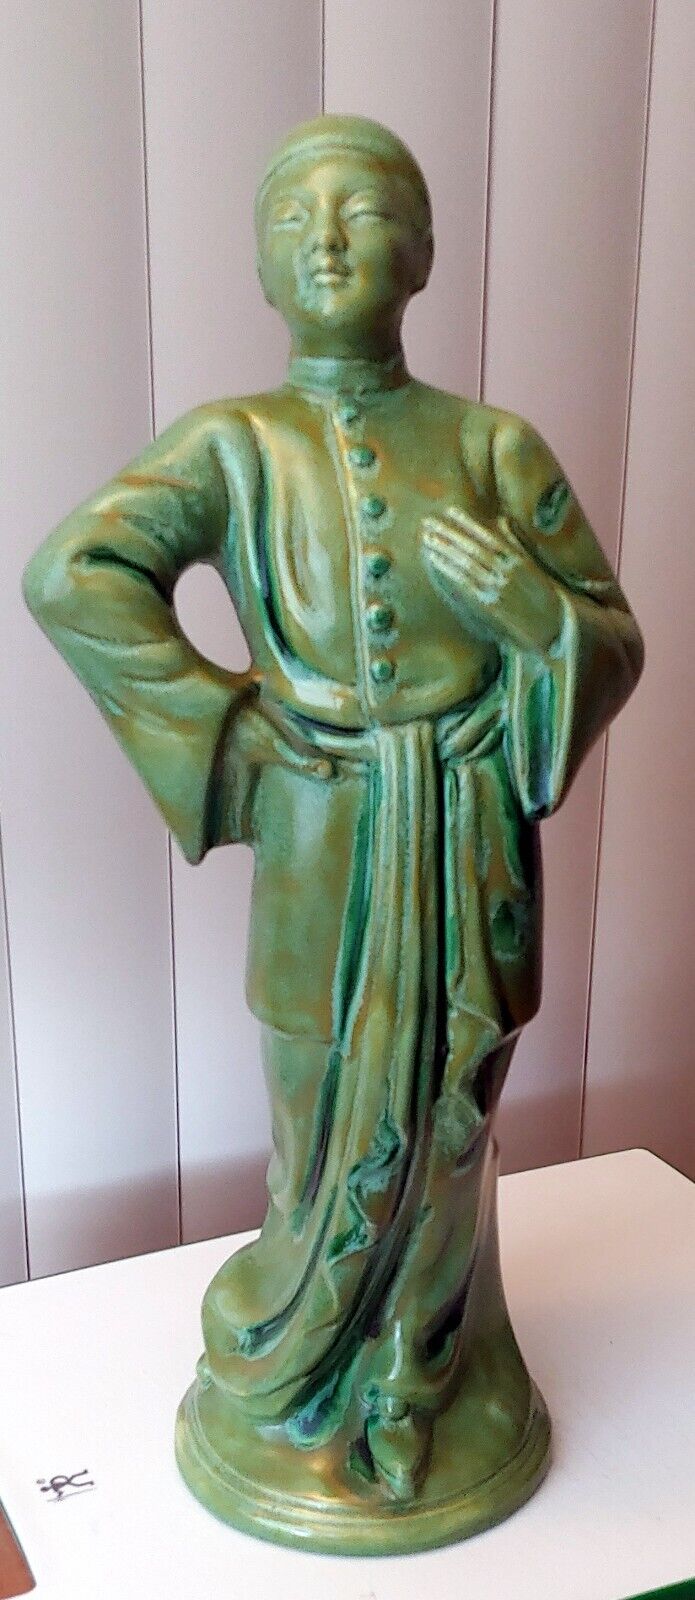 Vintage Ceramic Chinese Man Artist Large Green Figurine Asian Decor Statue 19.5\